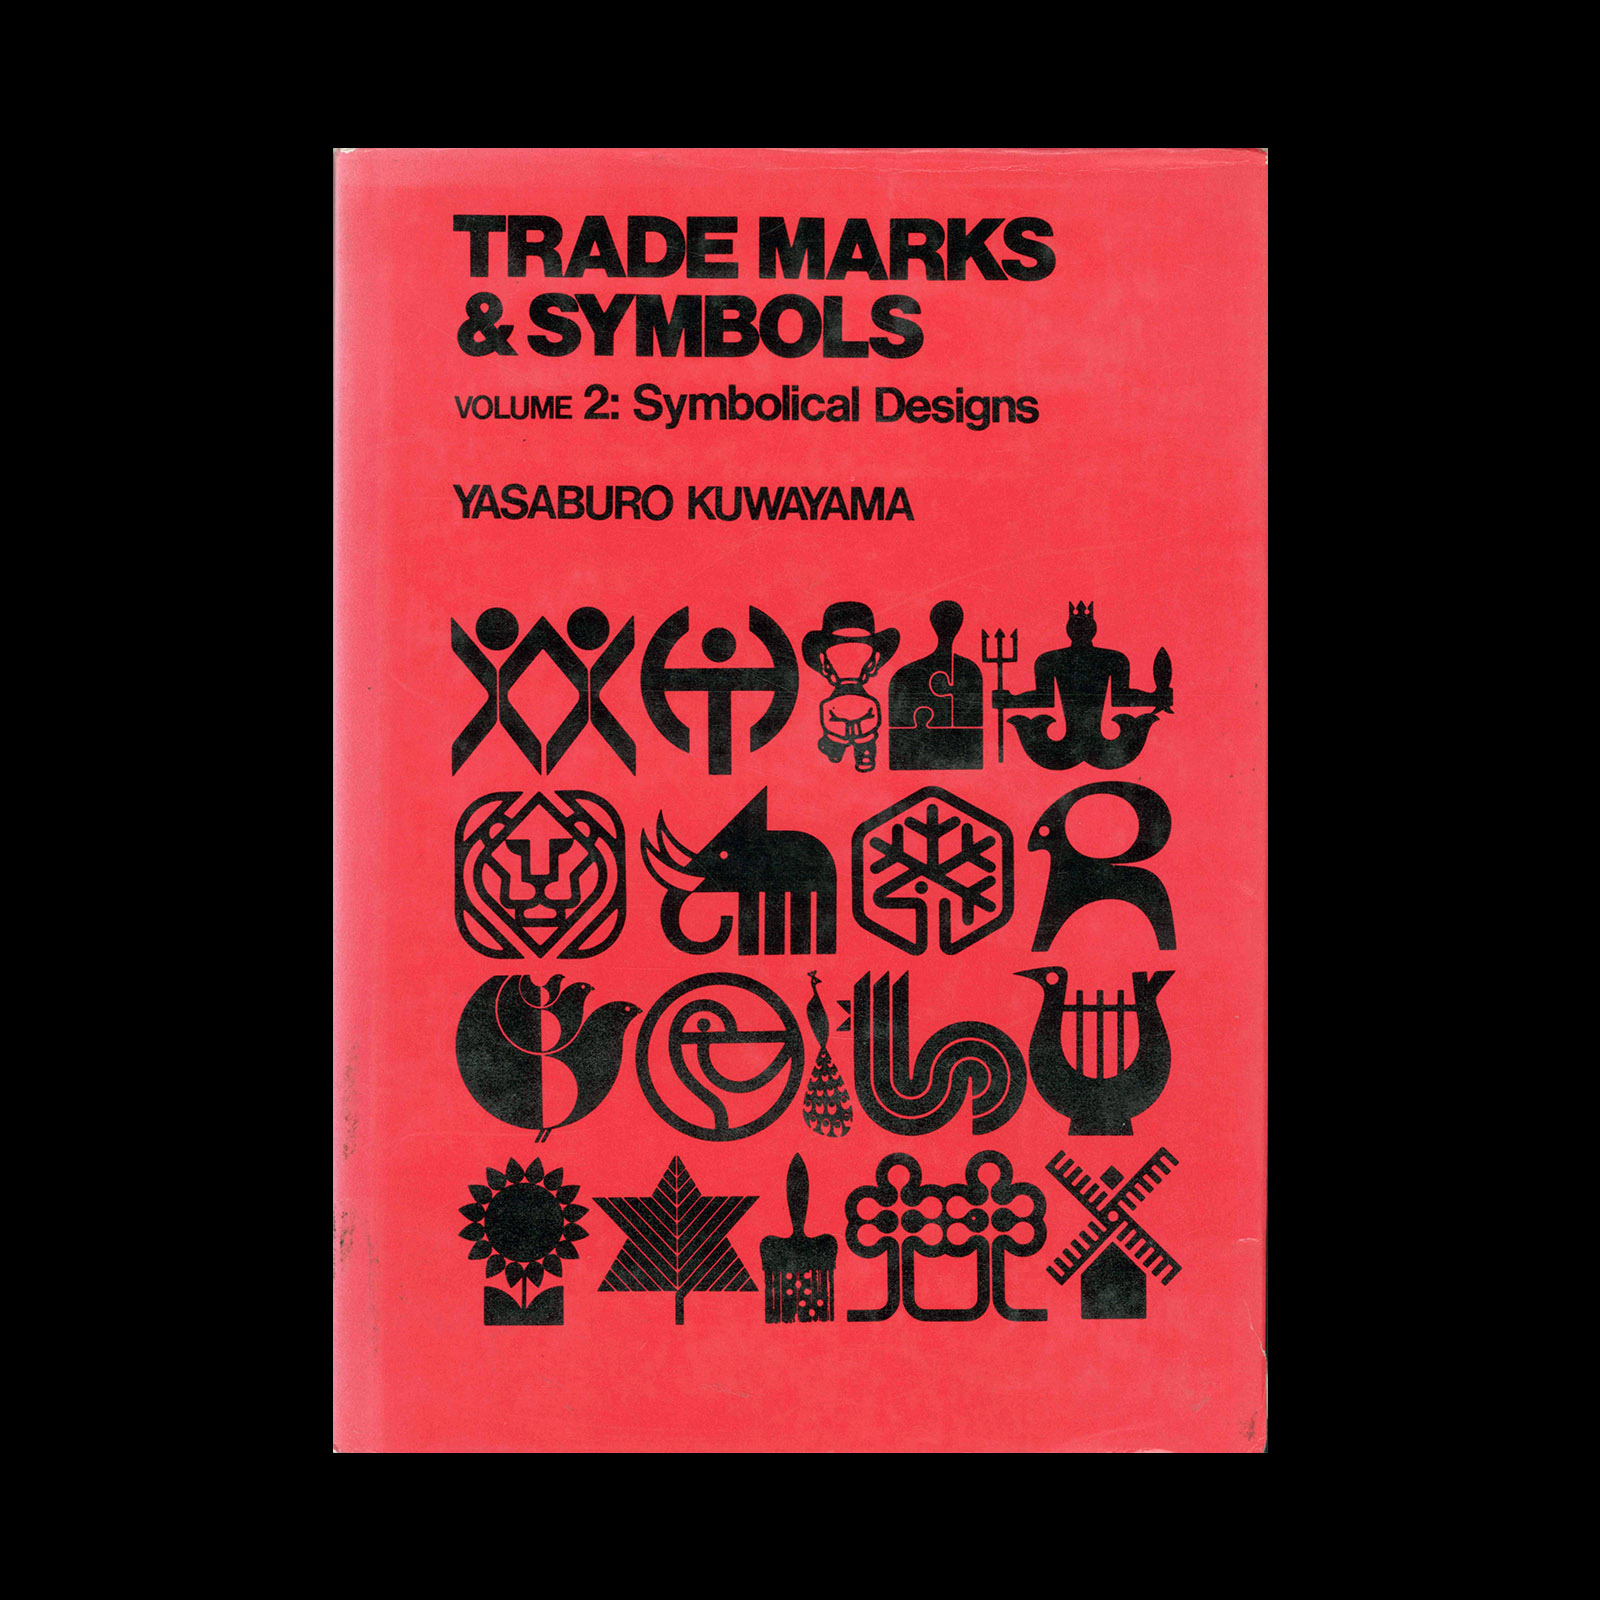 Trademarks & Symbols Volume 2, Yasaburo Kuwayama, 1973